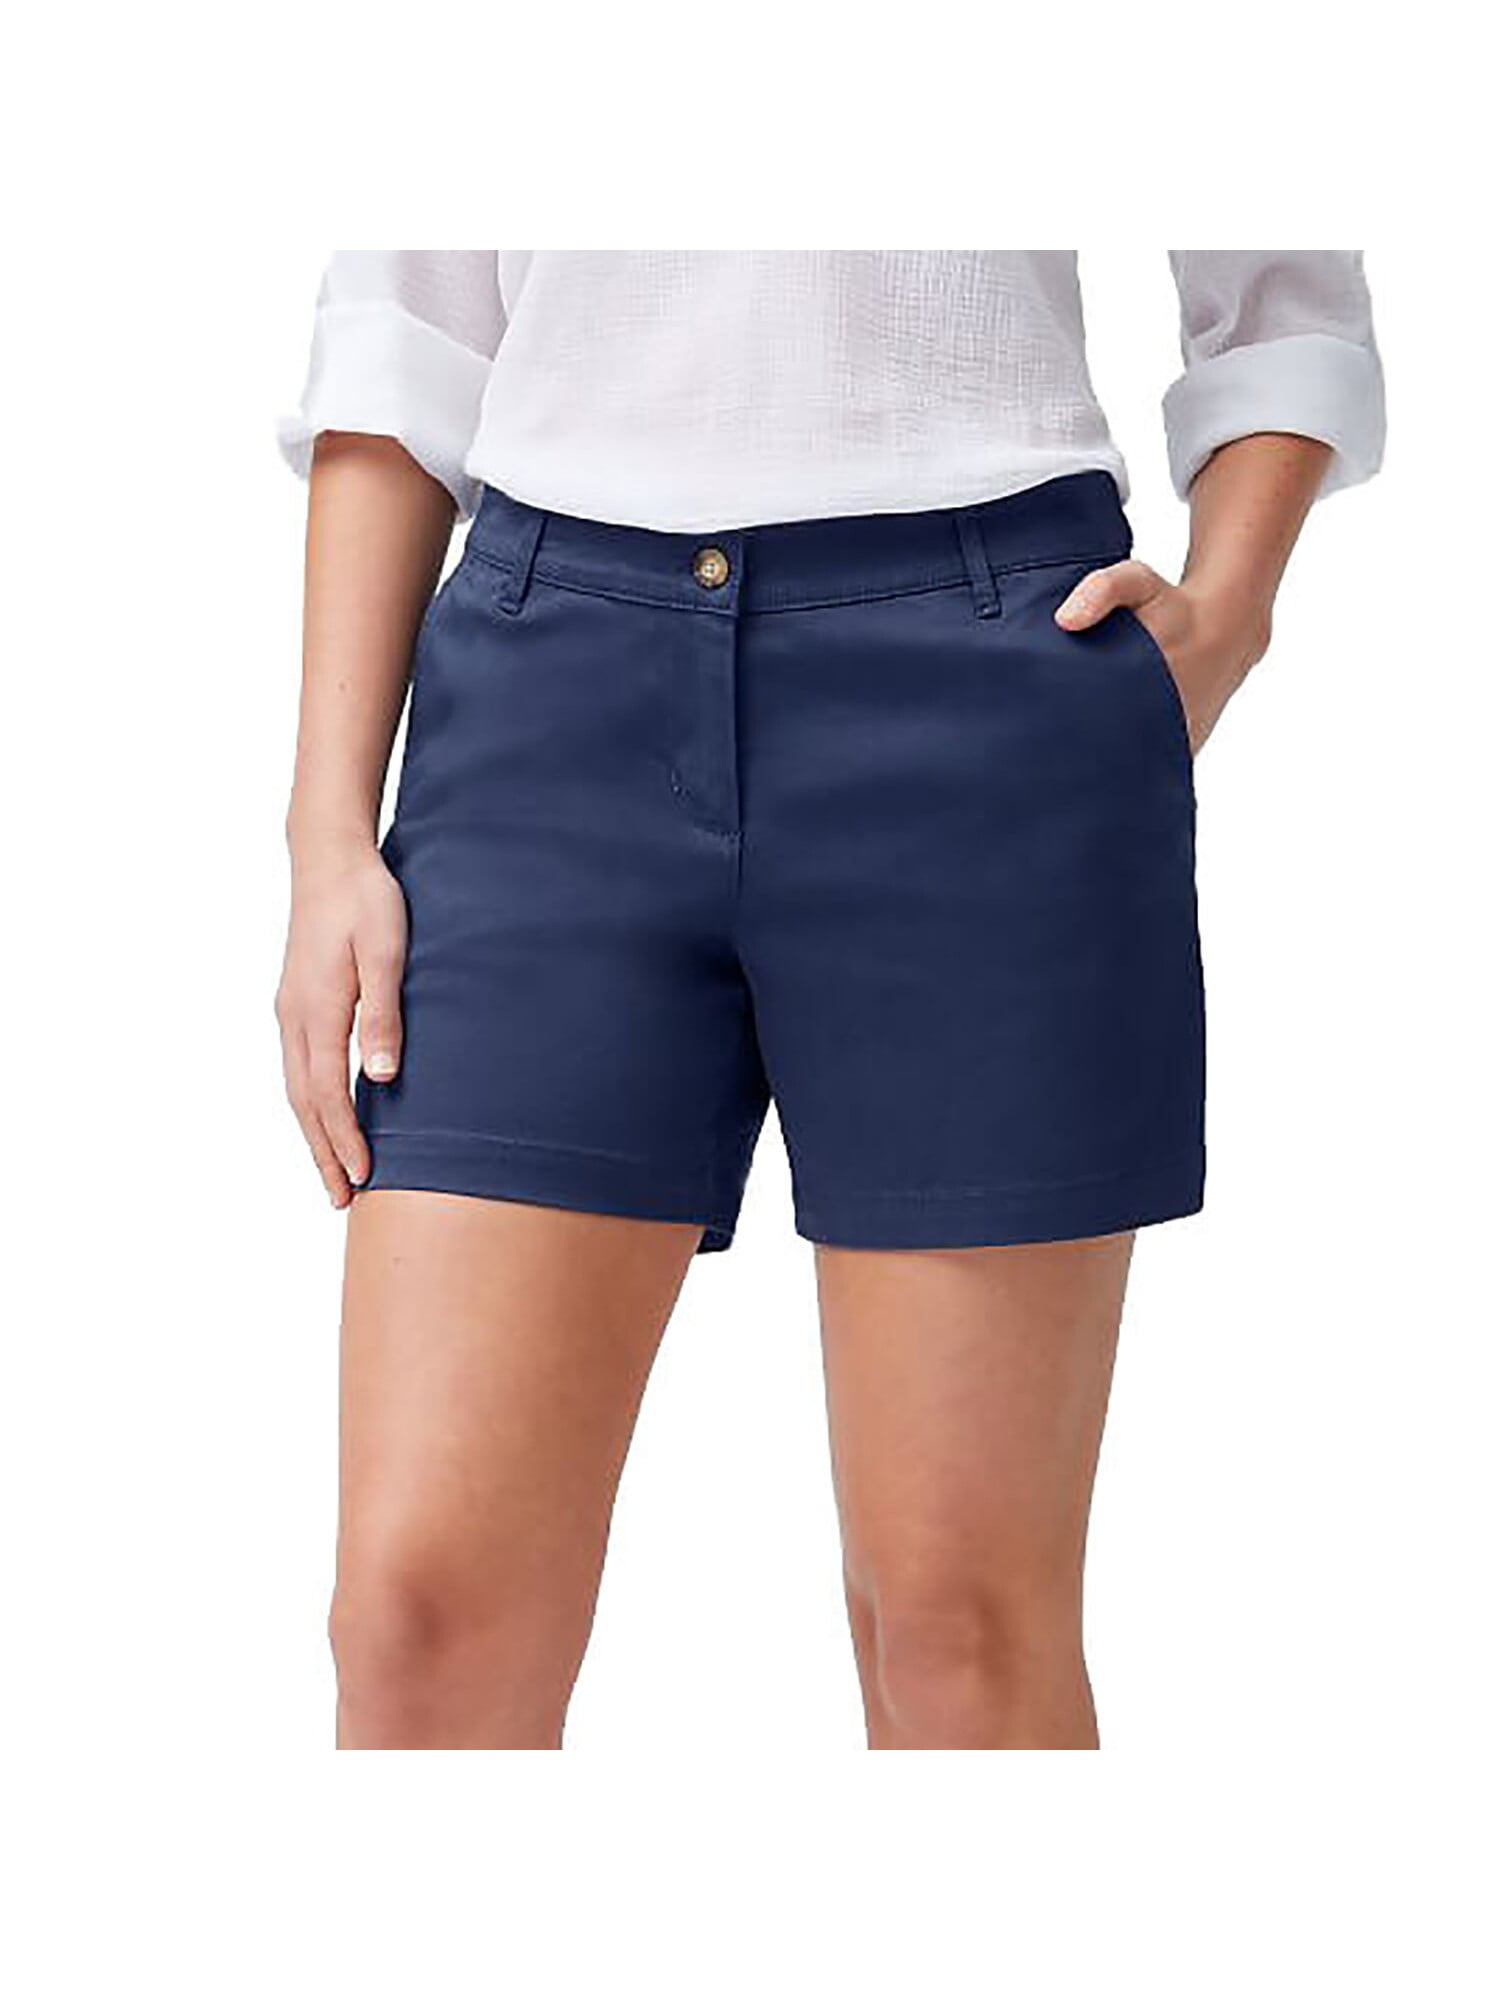 tommy bahama ladies shorts